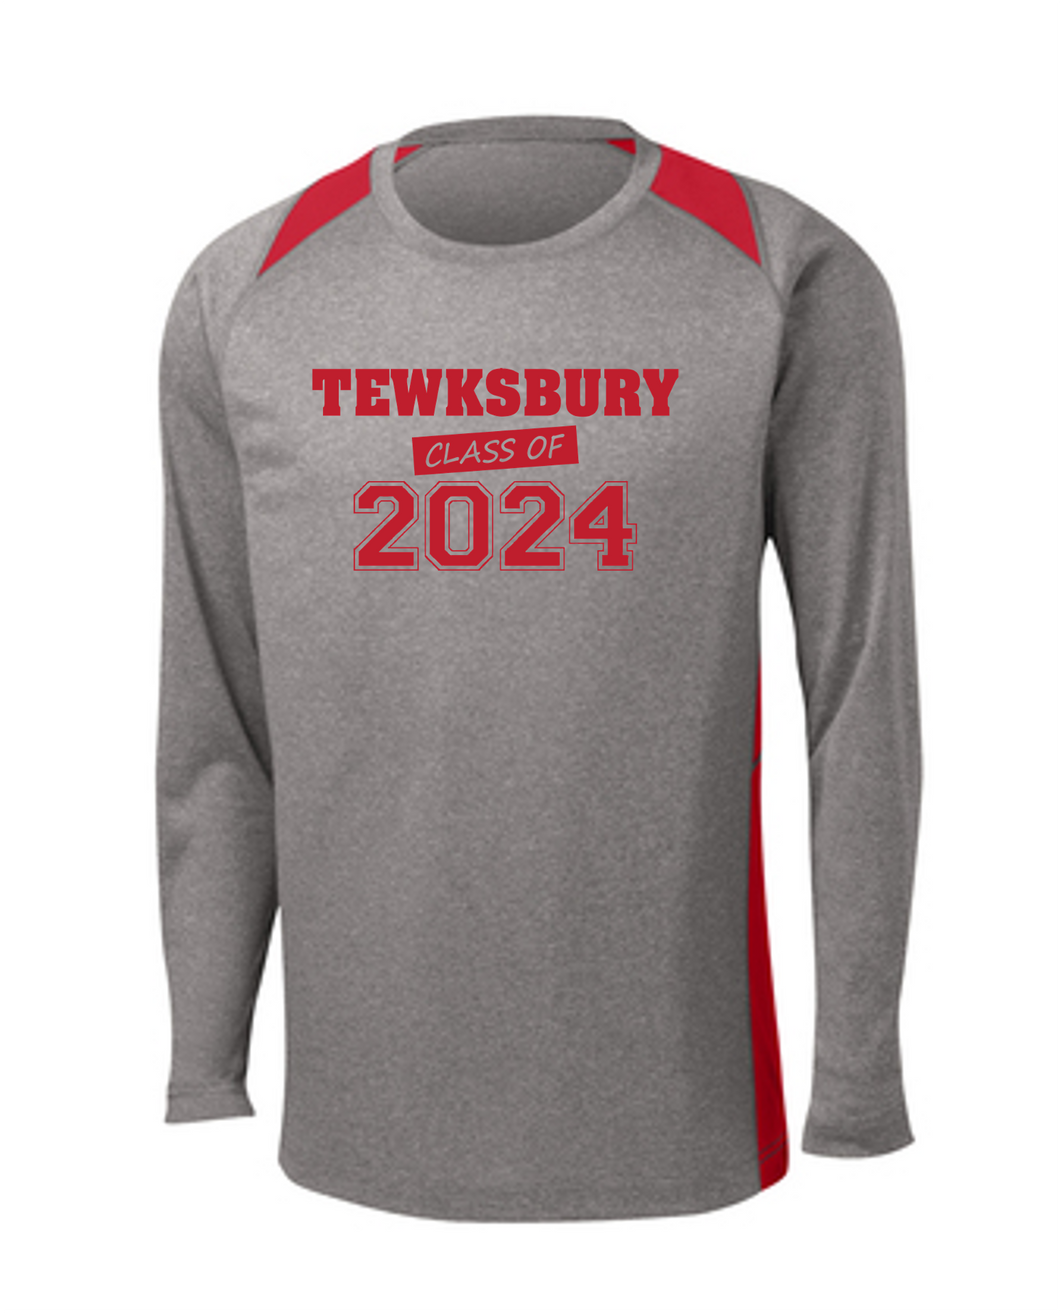 Sport-Tek® Long Sleeve Heather Colorblock Contender™ Tee - Tewksbury Class of 2024